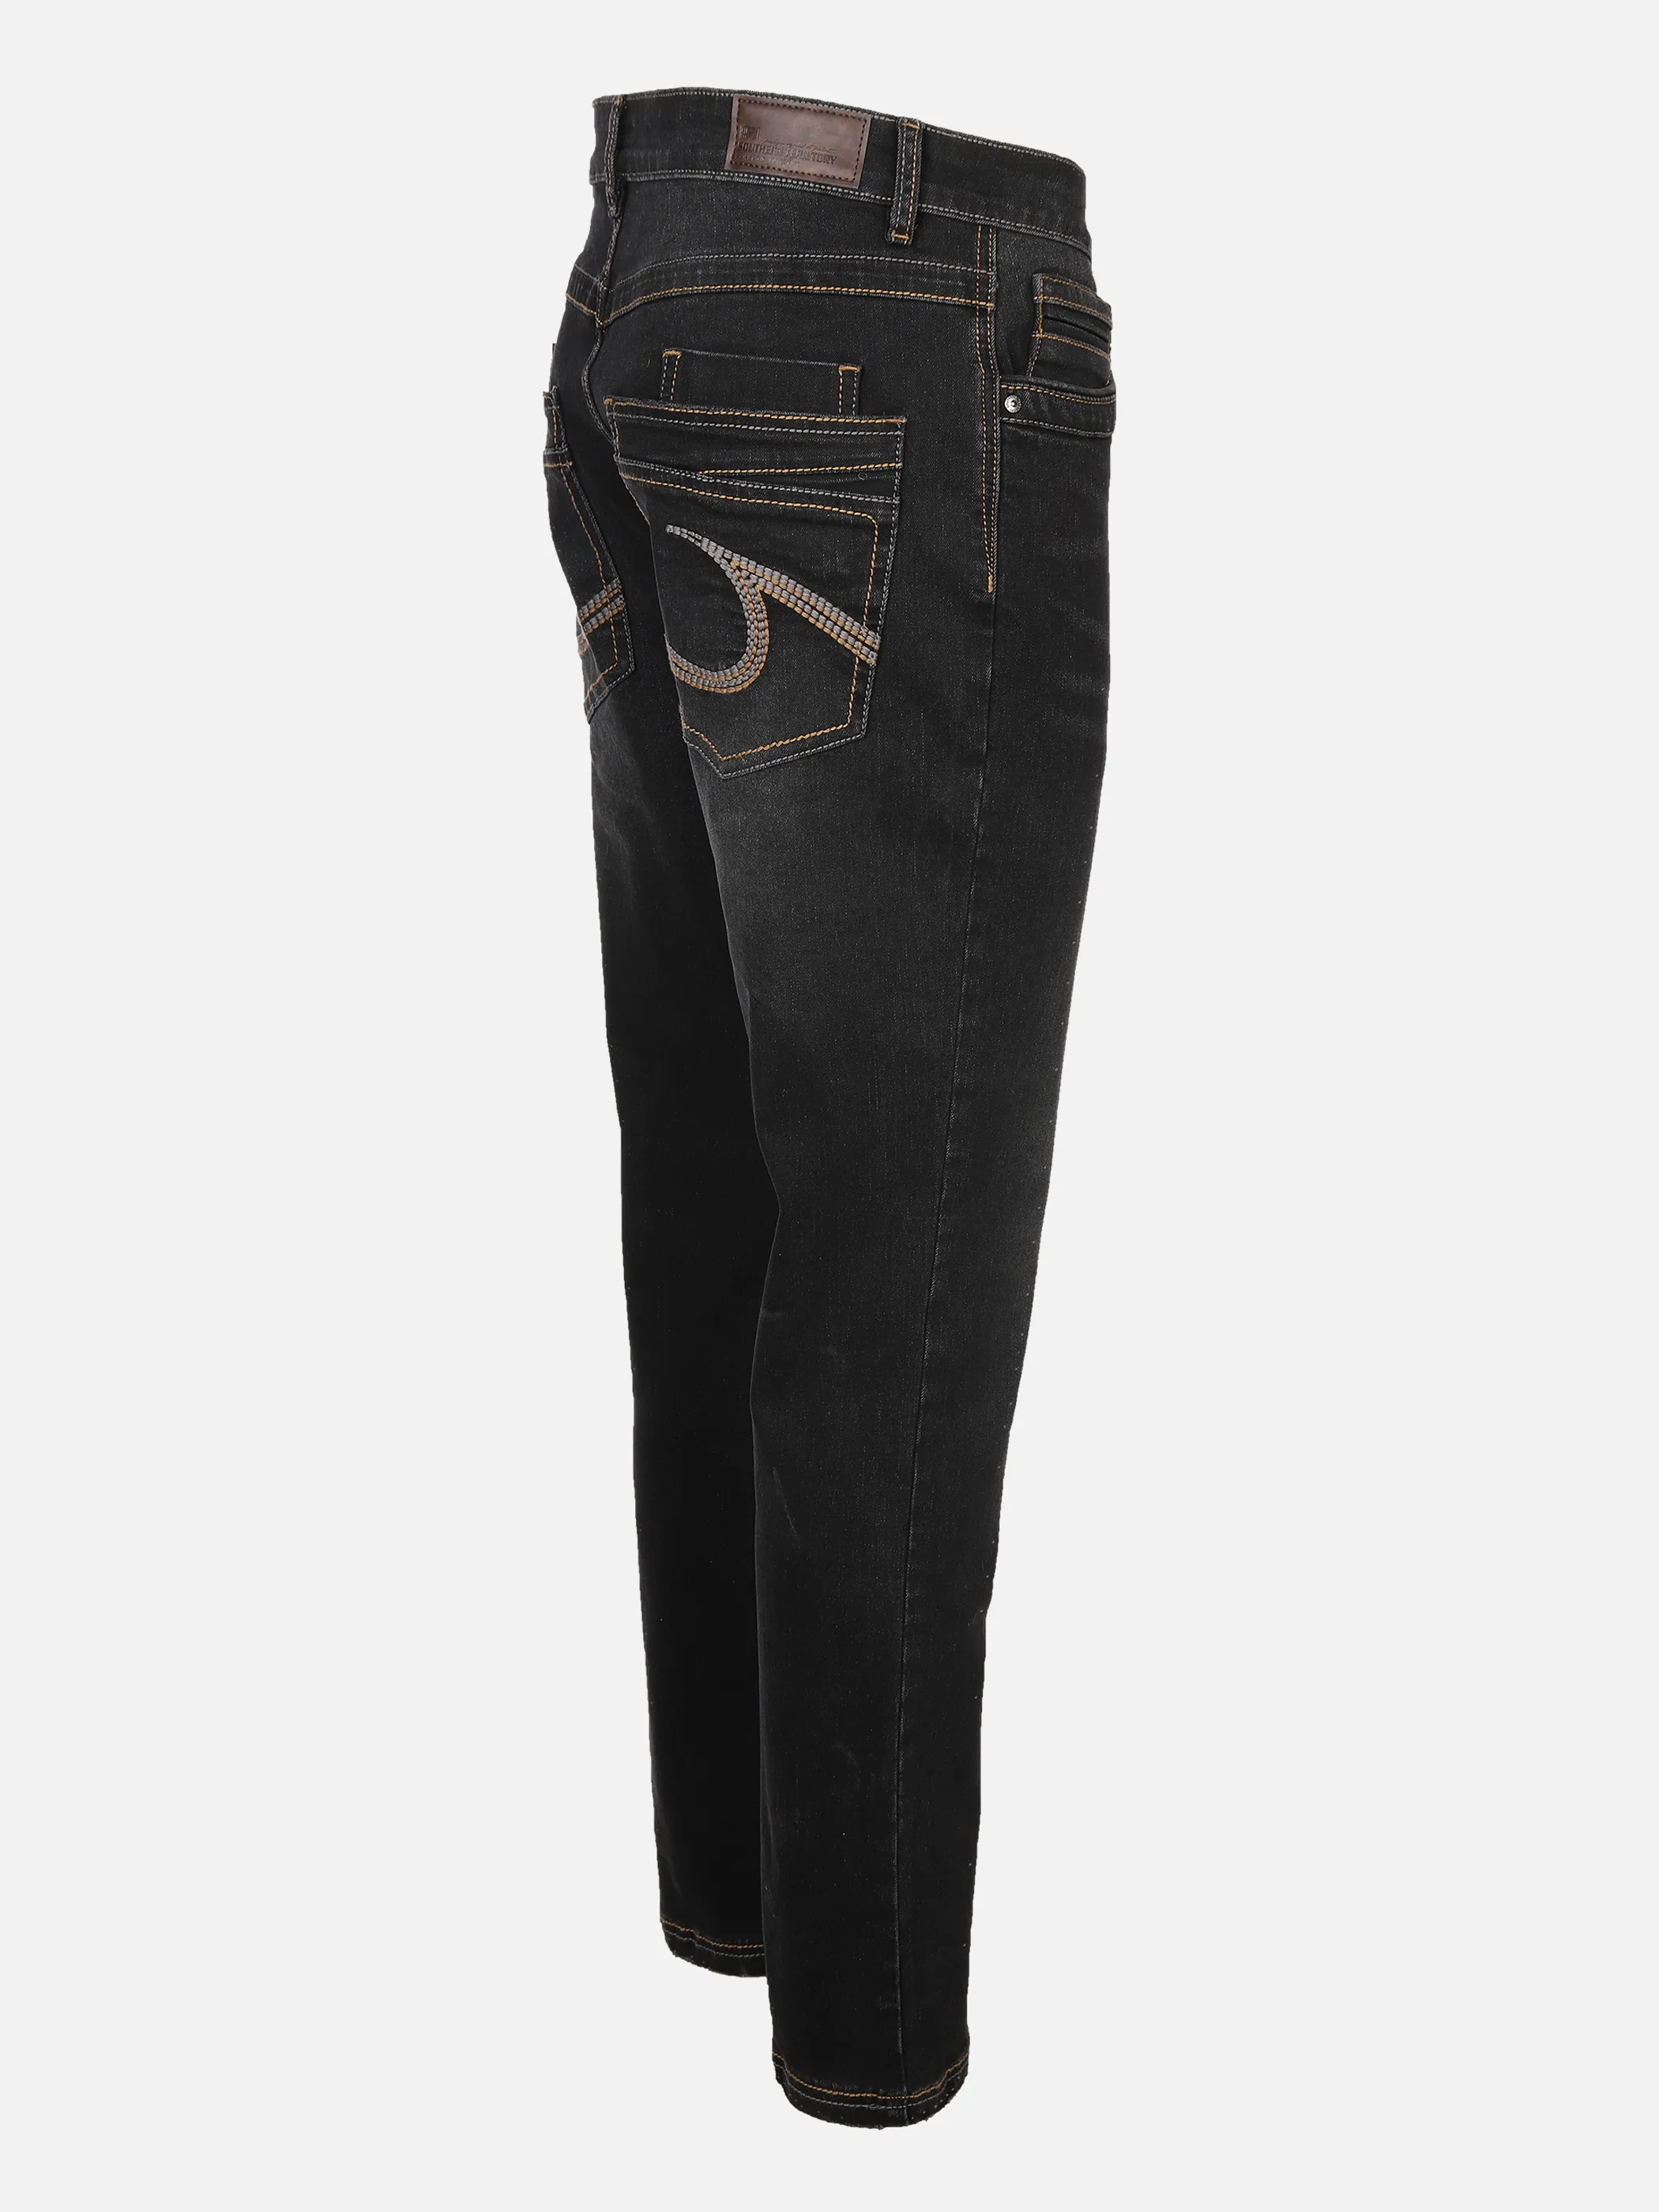 Southern Territory He-5-Pocket Jeans, Marc Schwarz 869386 BLACK 3